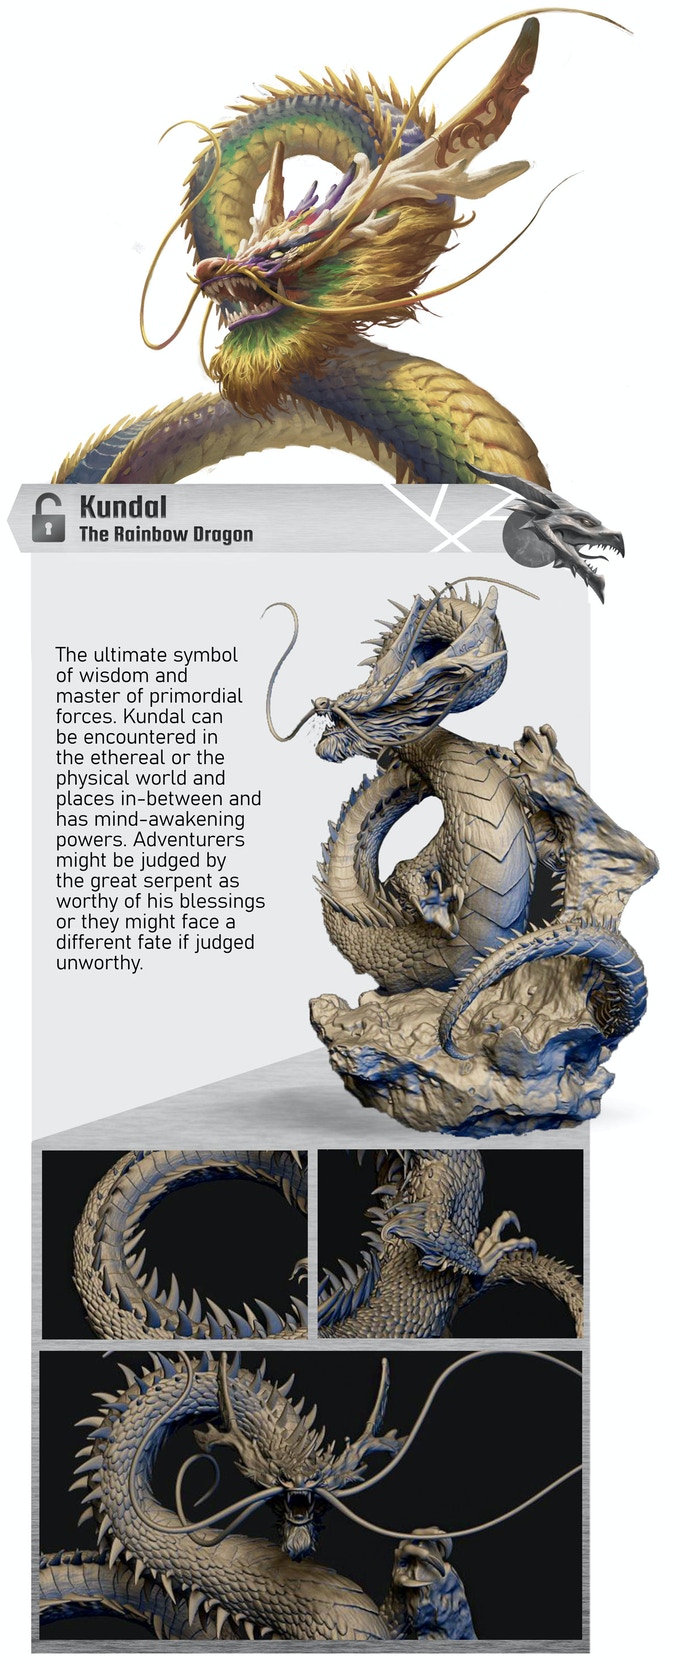 A477 - Legendary dragon design, The Dragon dwraft, STL 3D model